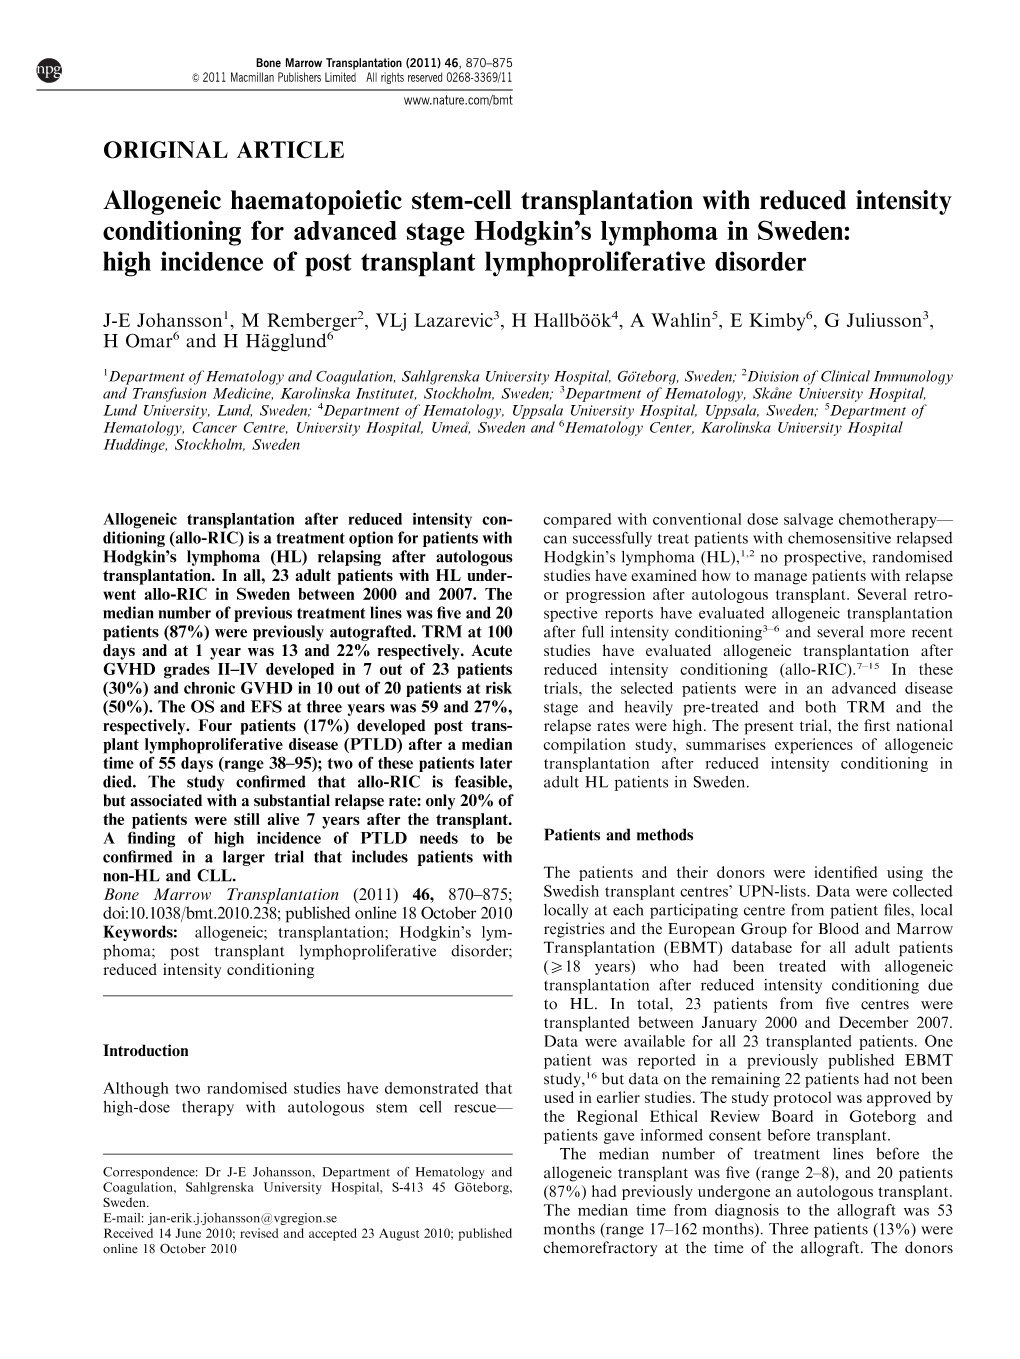 Allogeneic Haematopoietic Stem-Cell Transplantation With